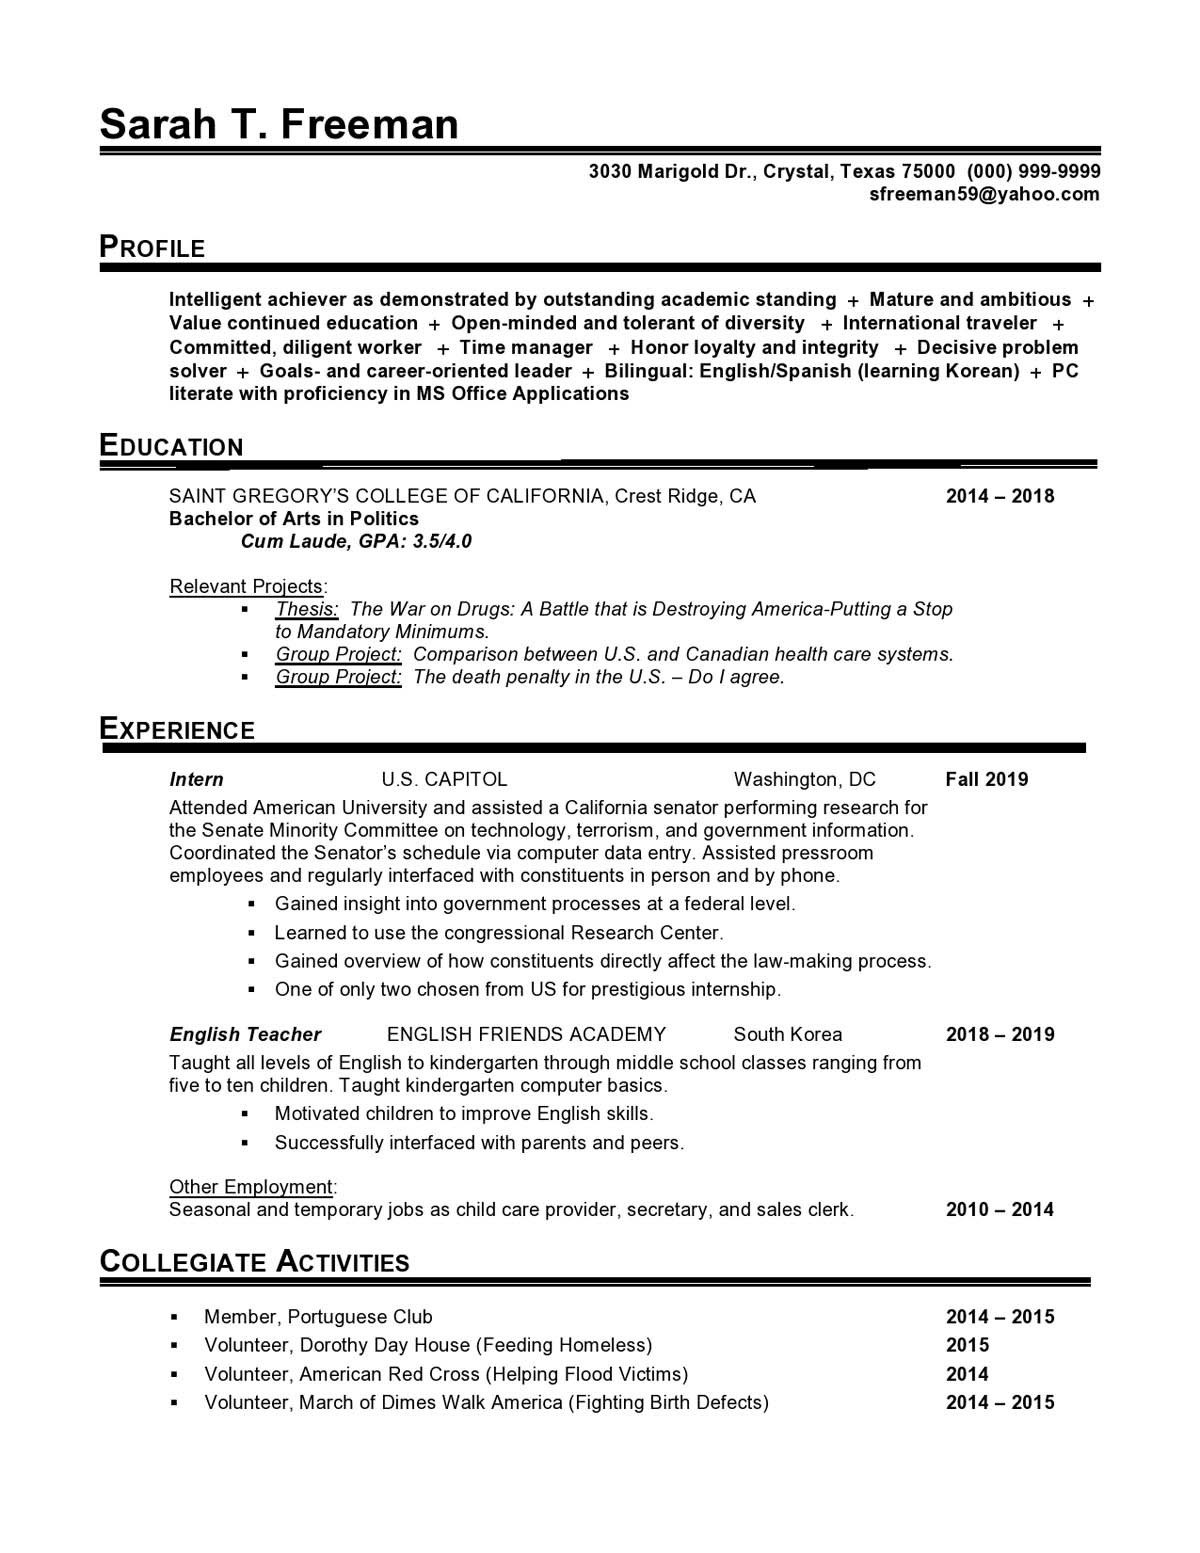 Sample Resume for Government Employee Philippines Government Entry Level Resume Samples Templates Vault.com